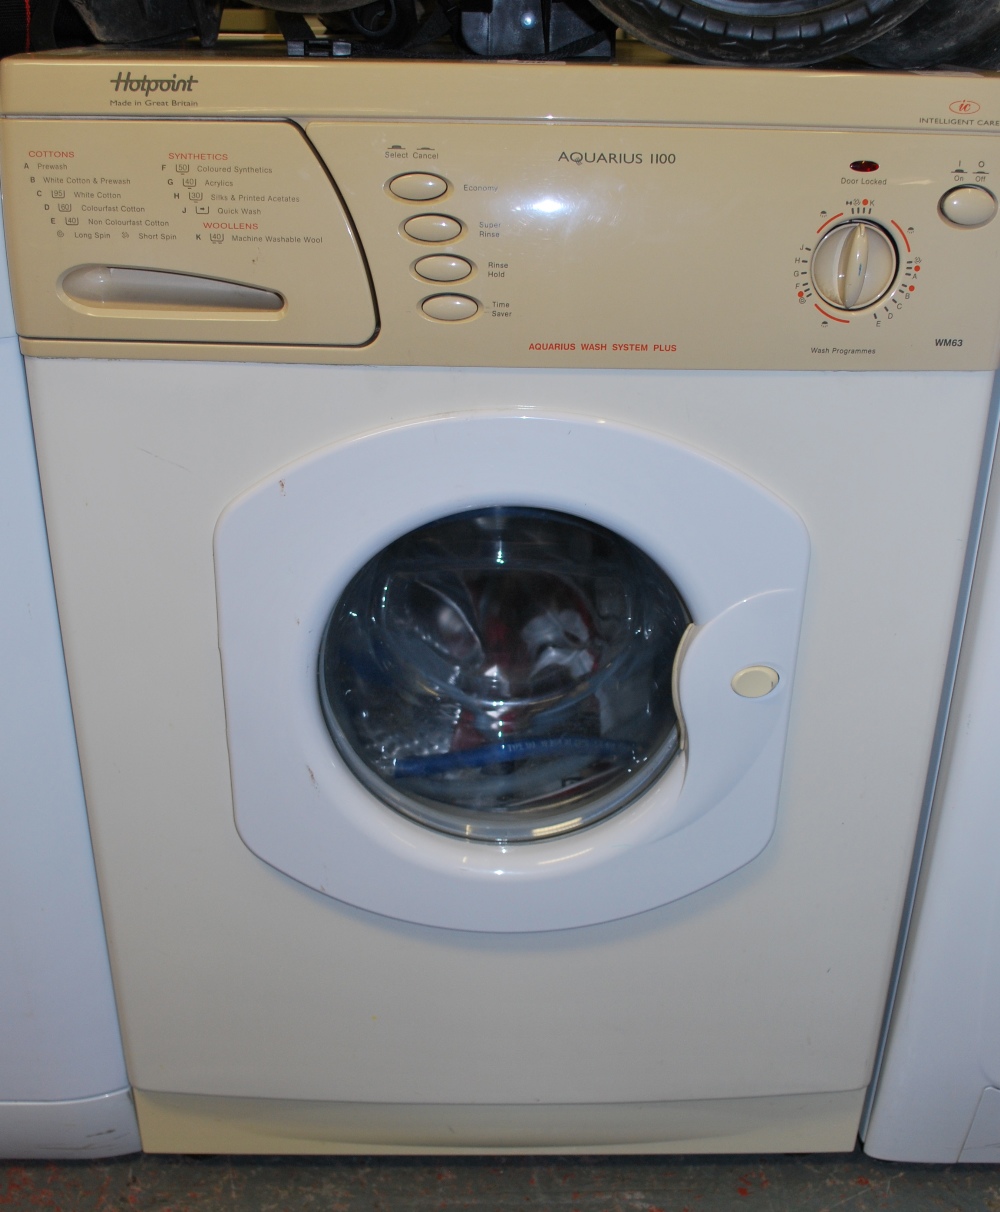 A Hotpoint Aquarius 1100 washing machine